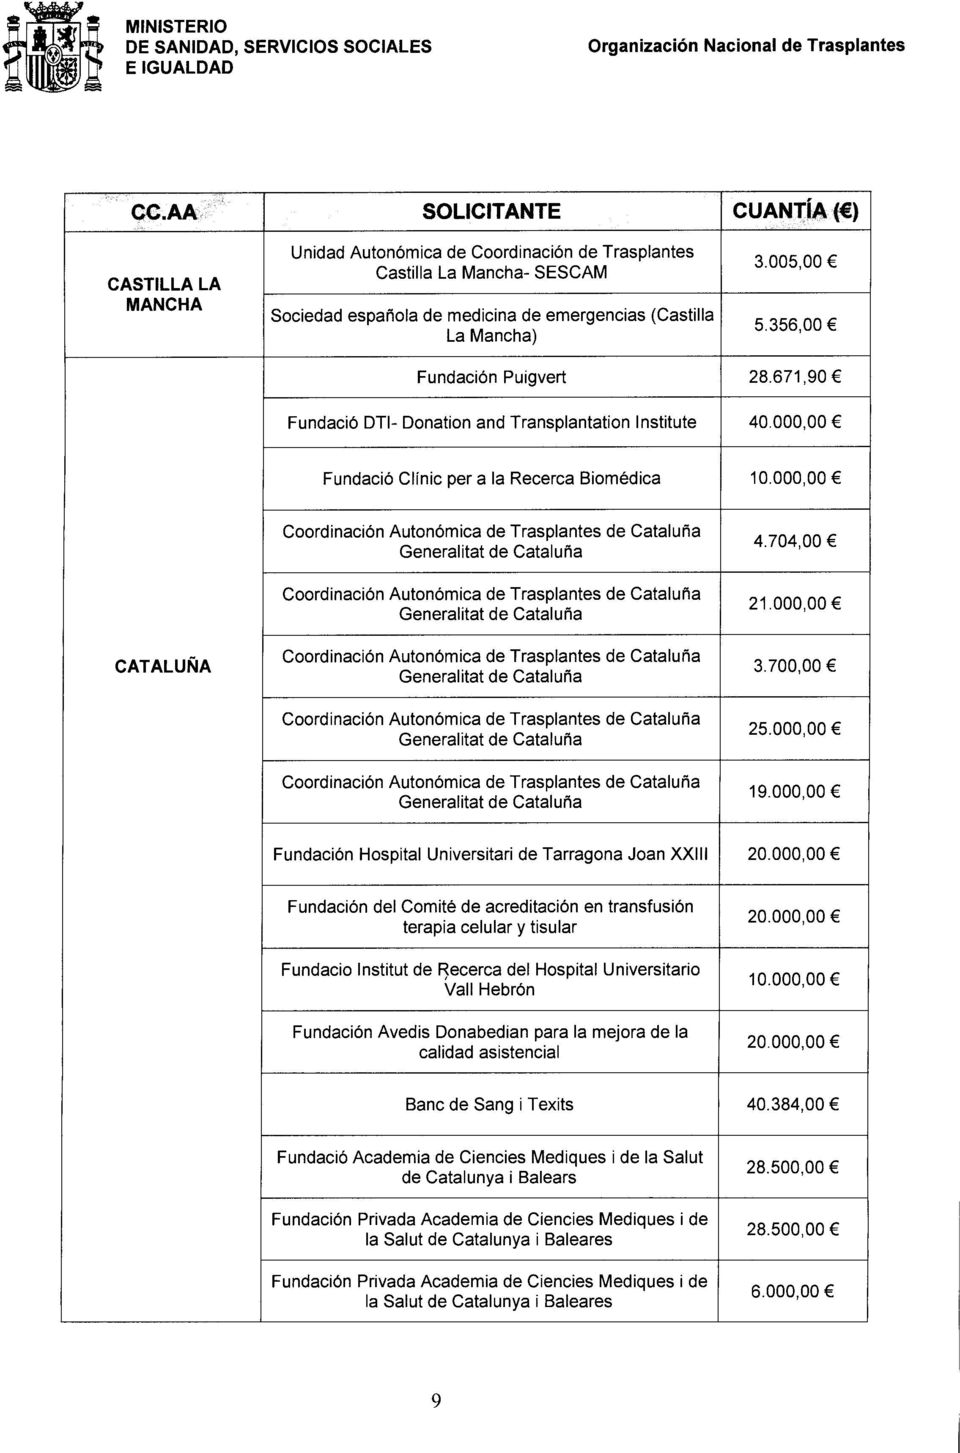 000,00 CATALURA CoordinaciOn AutonOmica de Trasplantes de Cataluna CoordinaciOn Auton6mica de Trasplantes de Cataluna CoordinaciOn Auton6mica de Trasplantes de Cataluna Coordinacion AutonOmica de